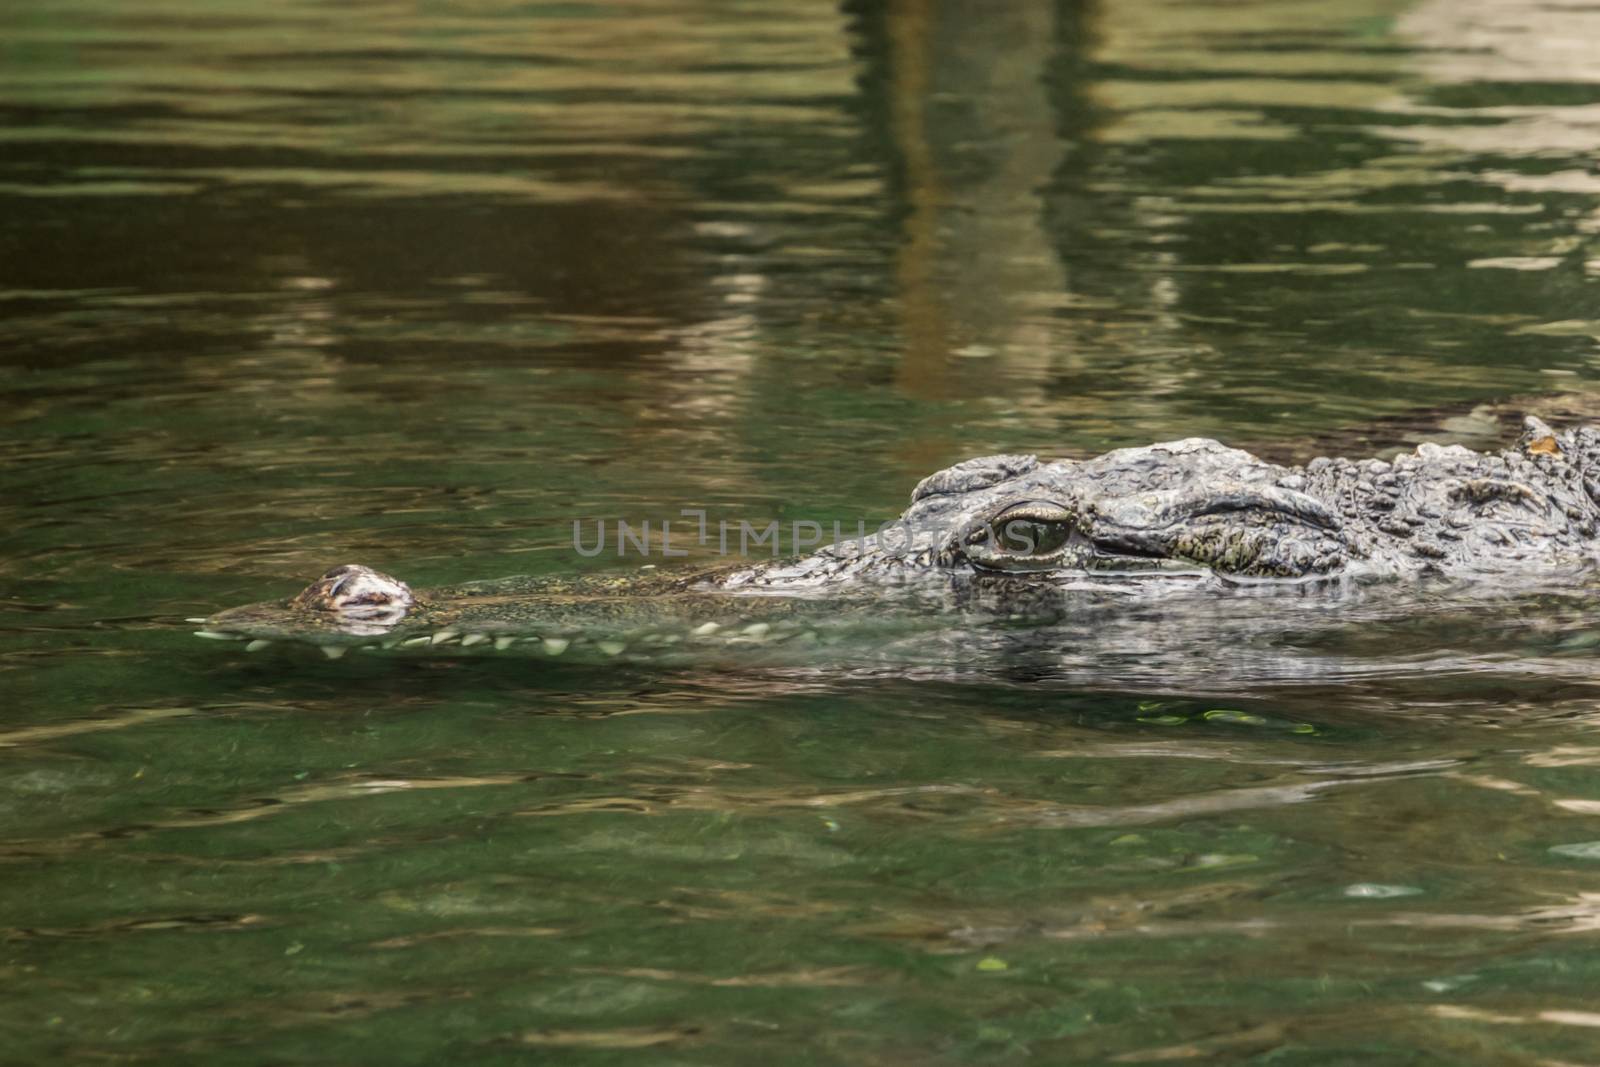 Head of croc crocodile swimming trough water